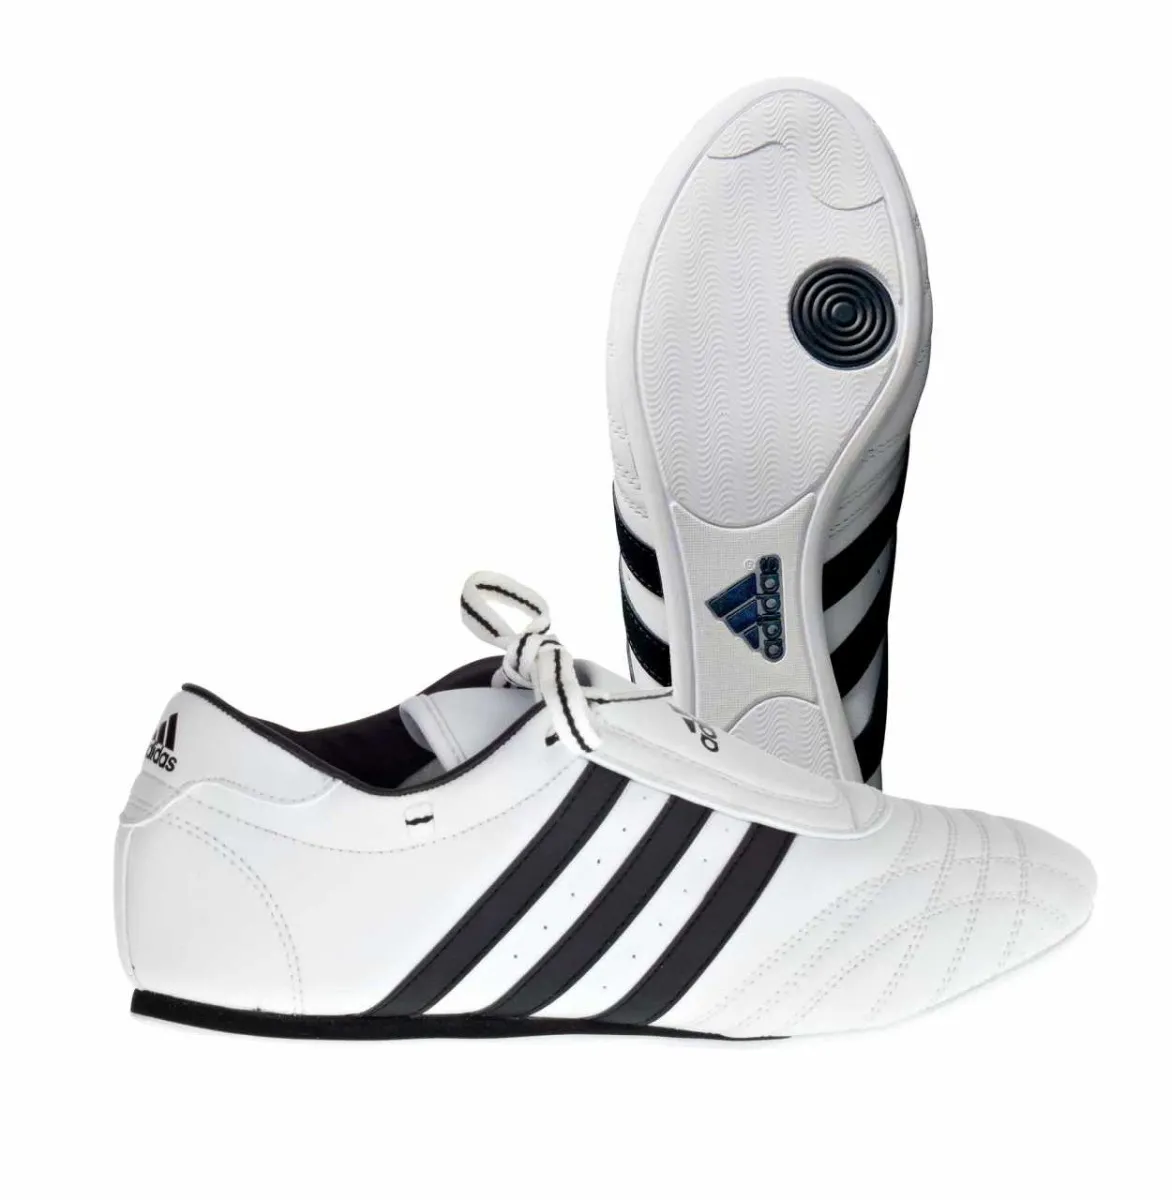 Adidas zapatos SM II blanco